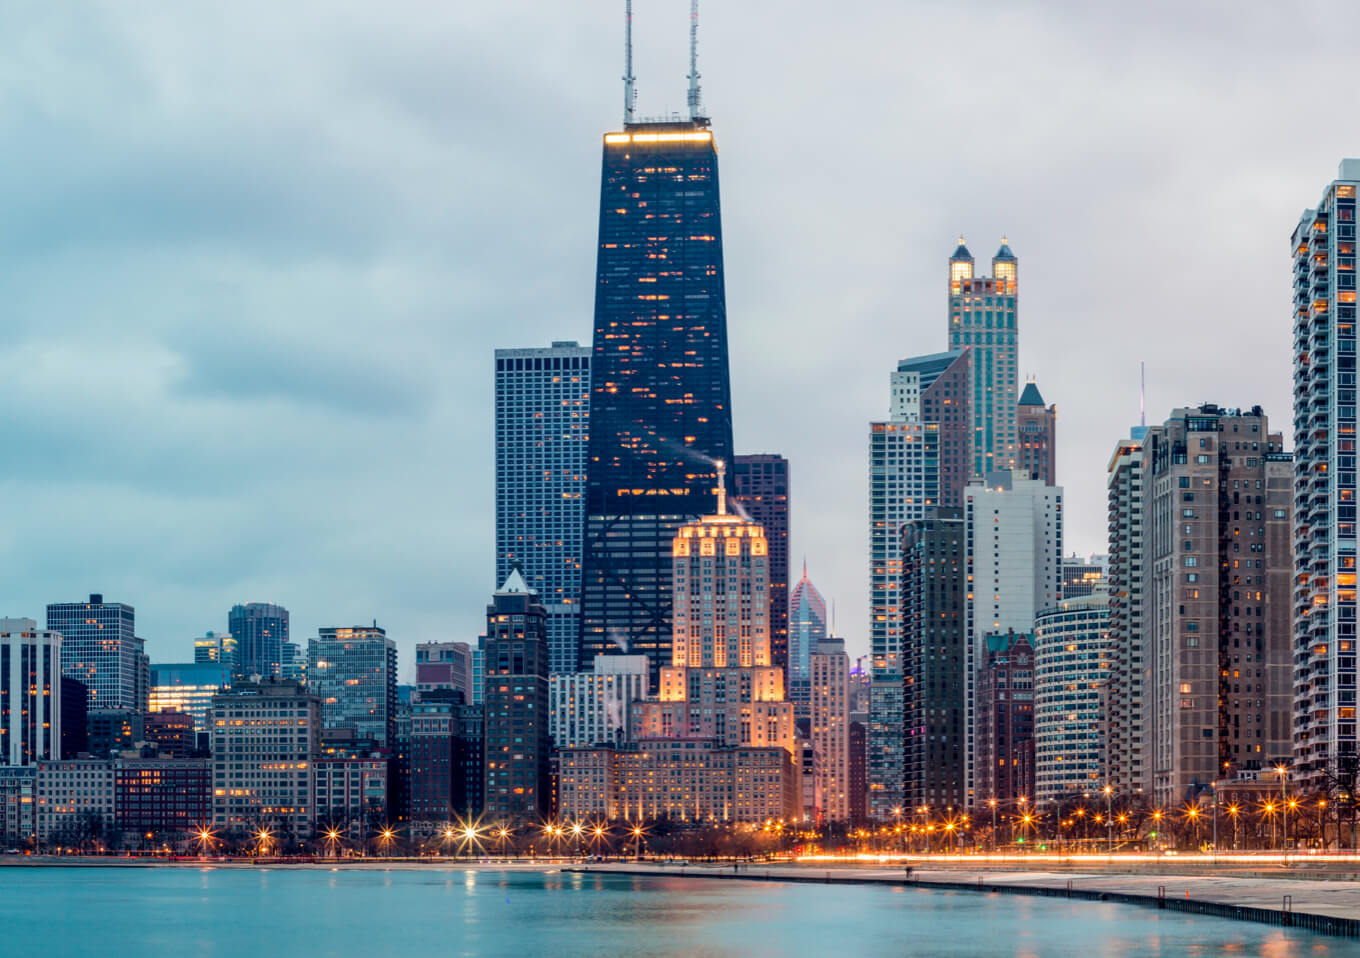 A coastal view of Chicago